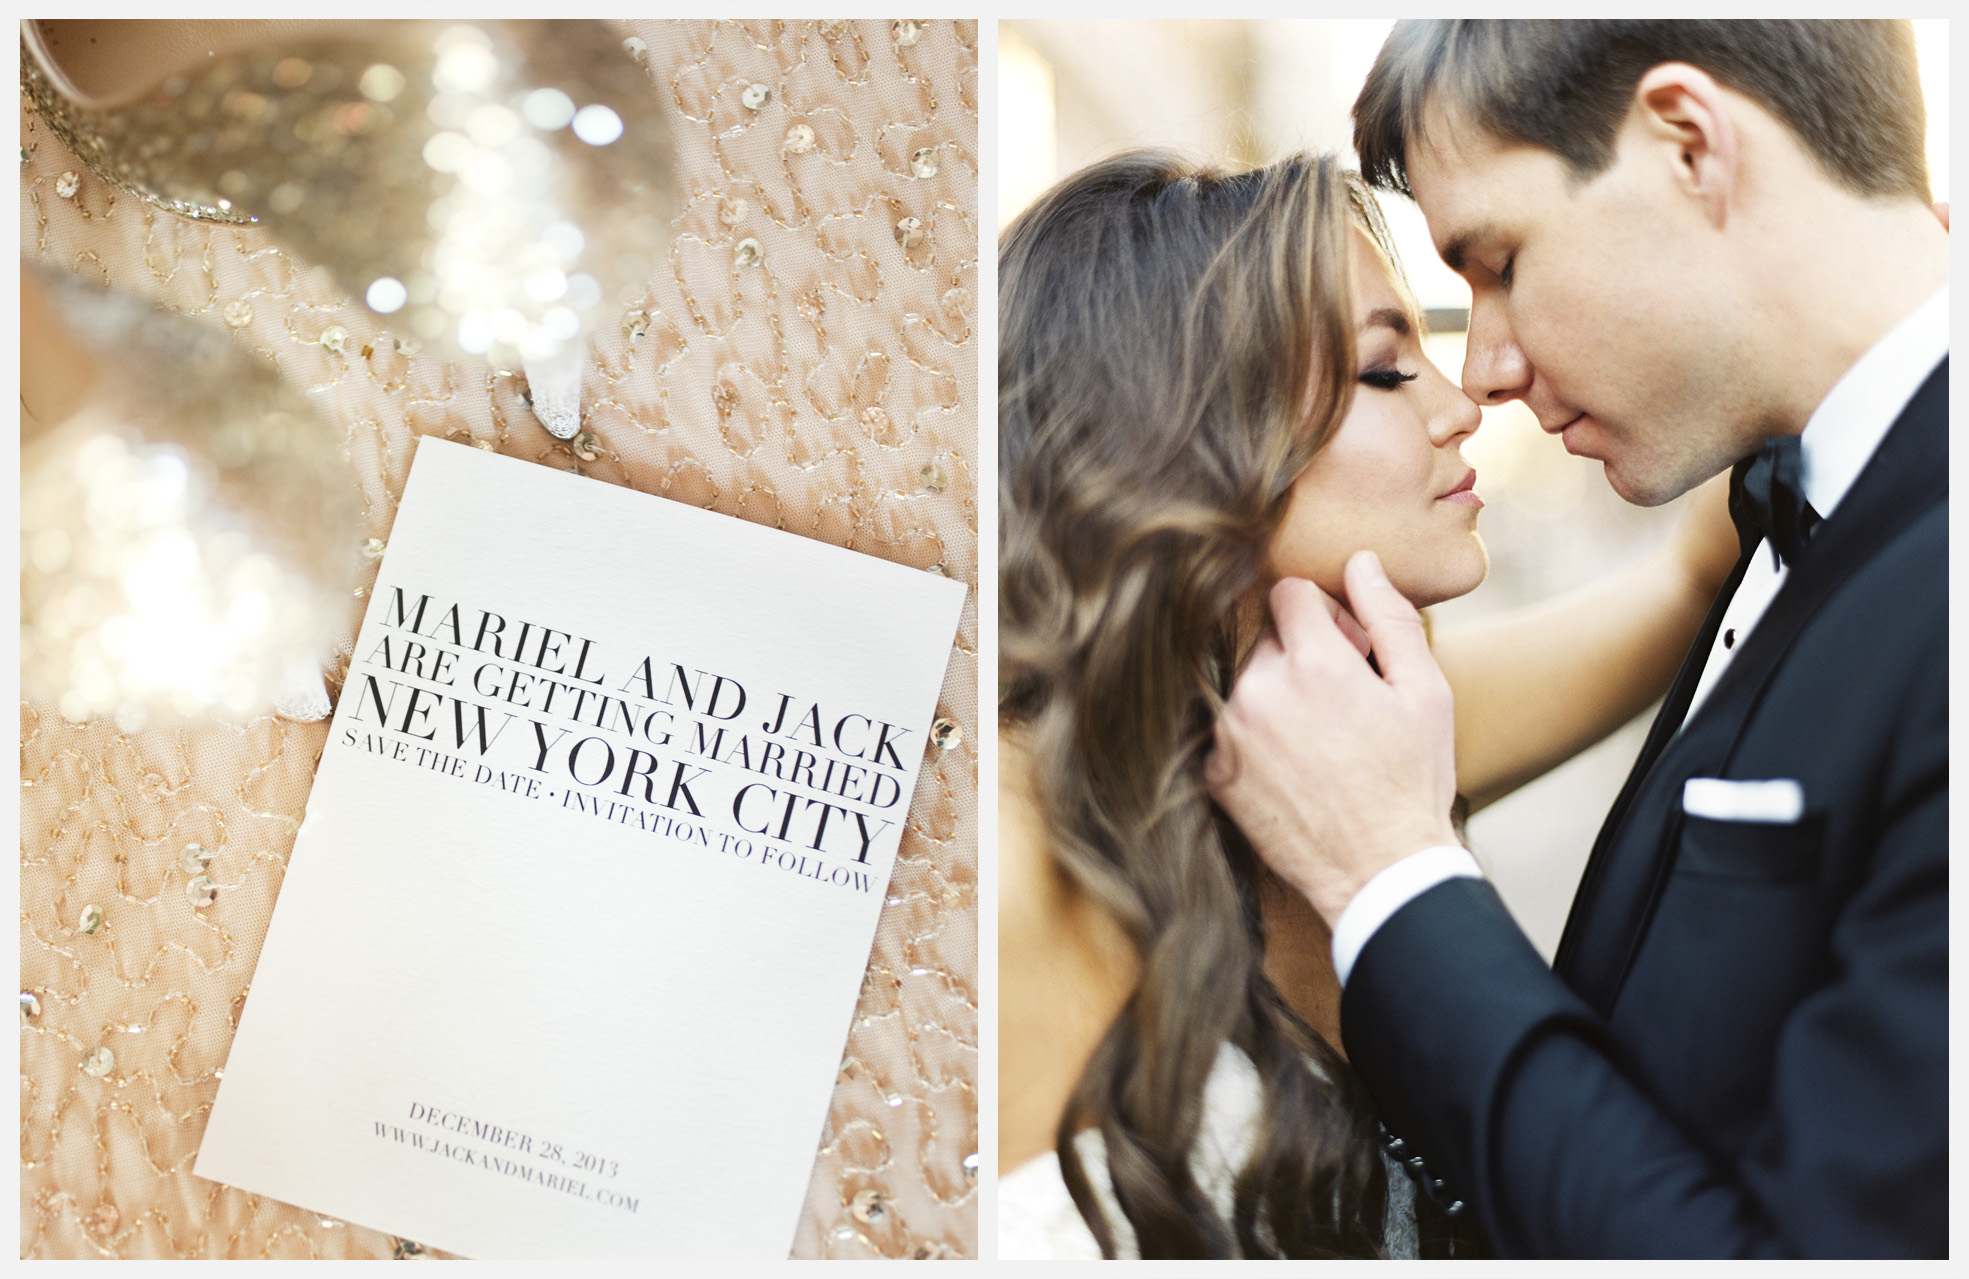 Mariel & Jack had their wedding portraits done outside Gramercy Park Hotel